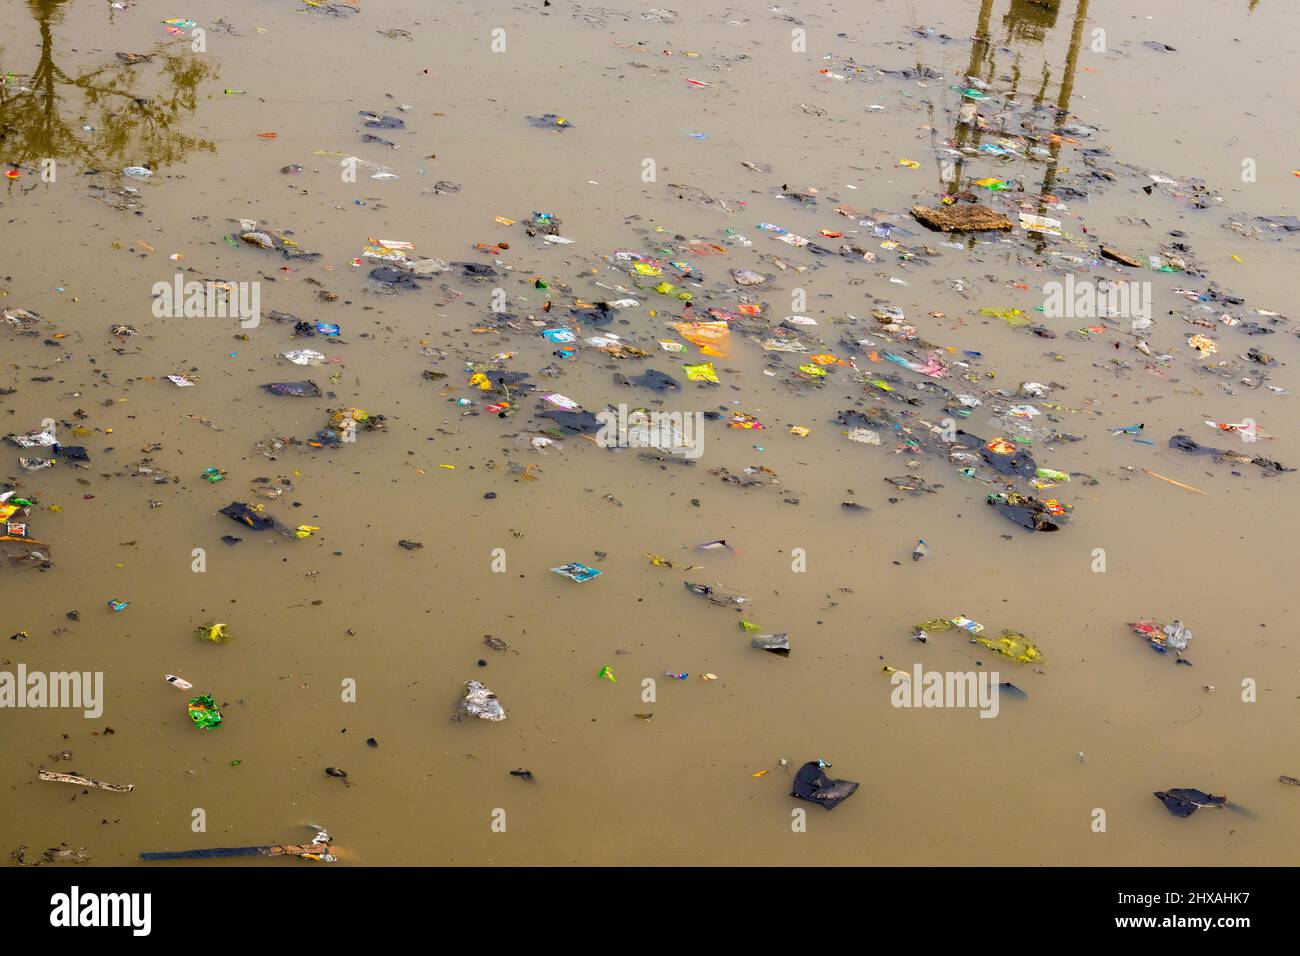 Flussverschmutzung Bild. Speichern Flusswasser bilden Verschmutzung. Stockfoto